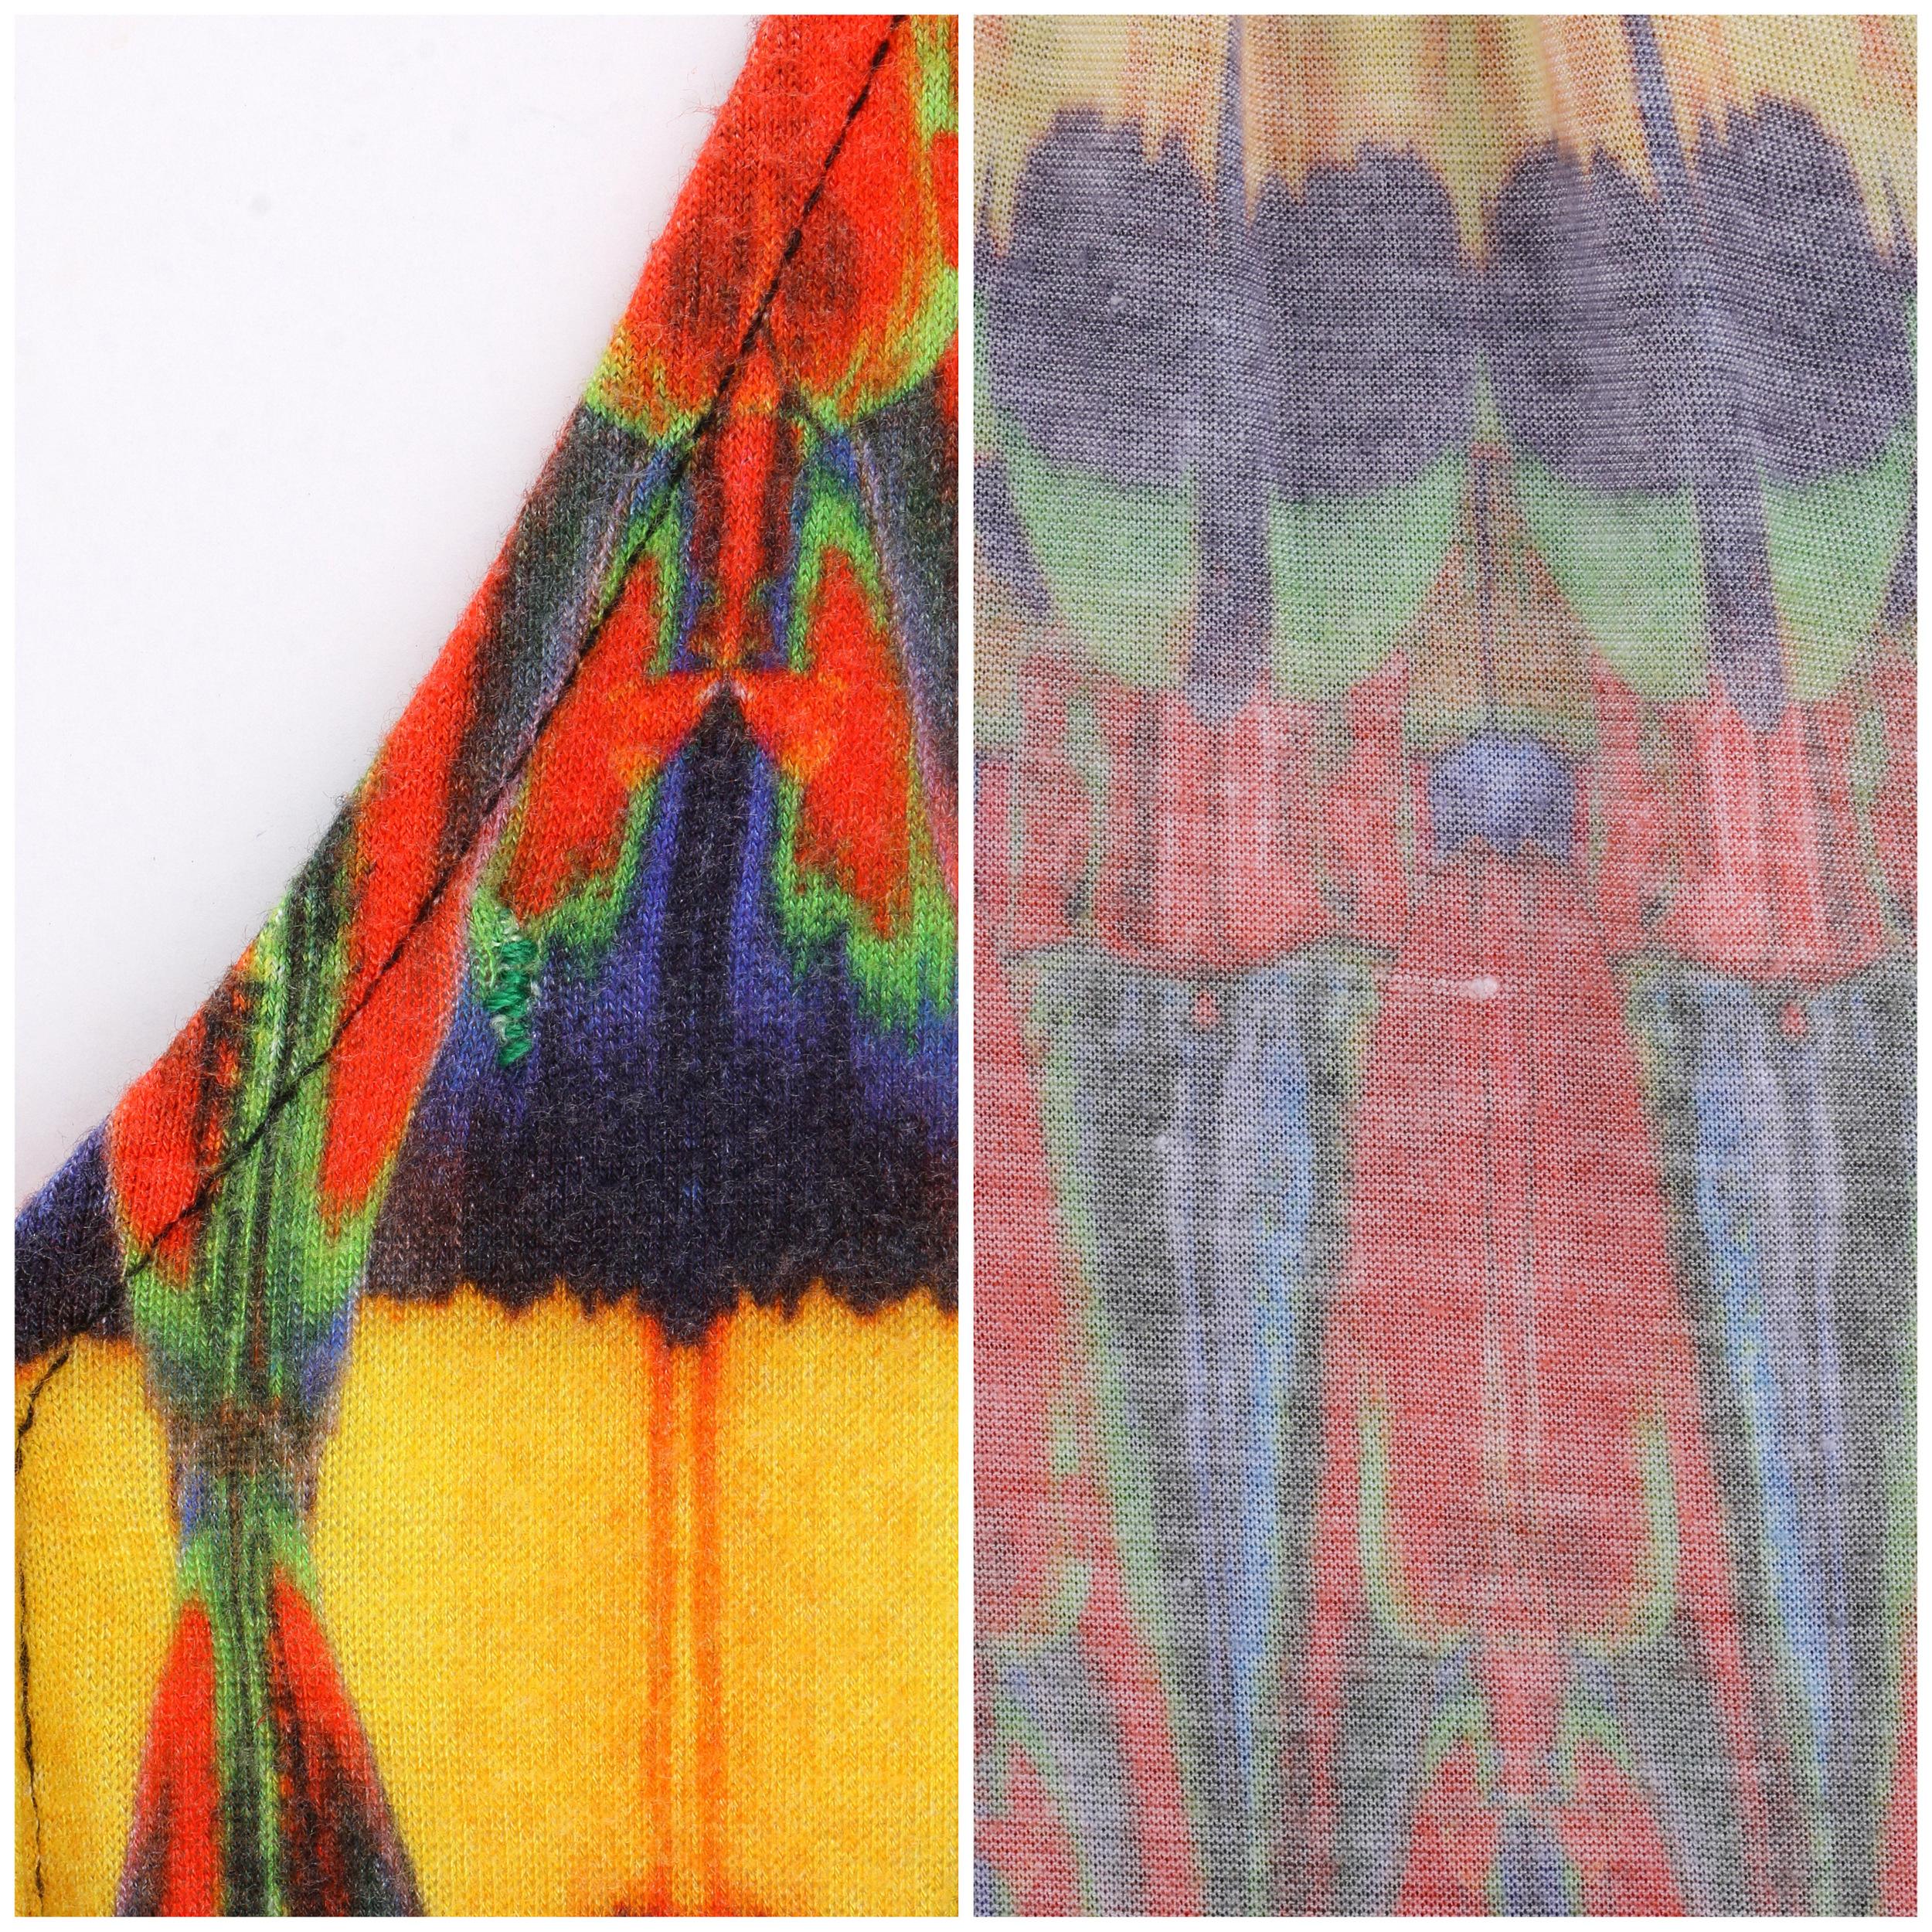 ALEXANDER McQUEEN S/S 2010 Multi-color Kaleidoscope Jersey Knit Dress  For Sale 2